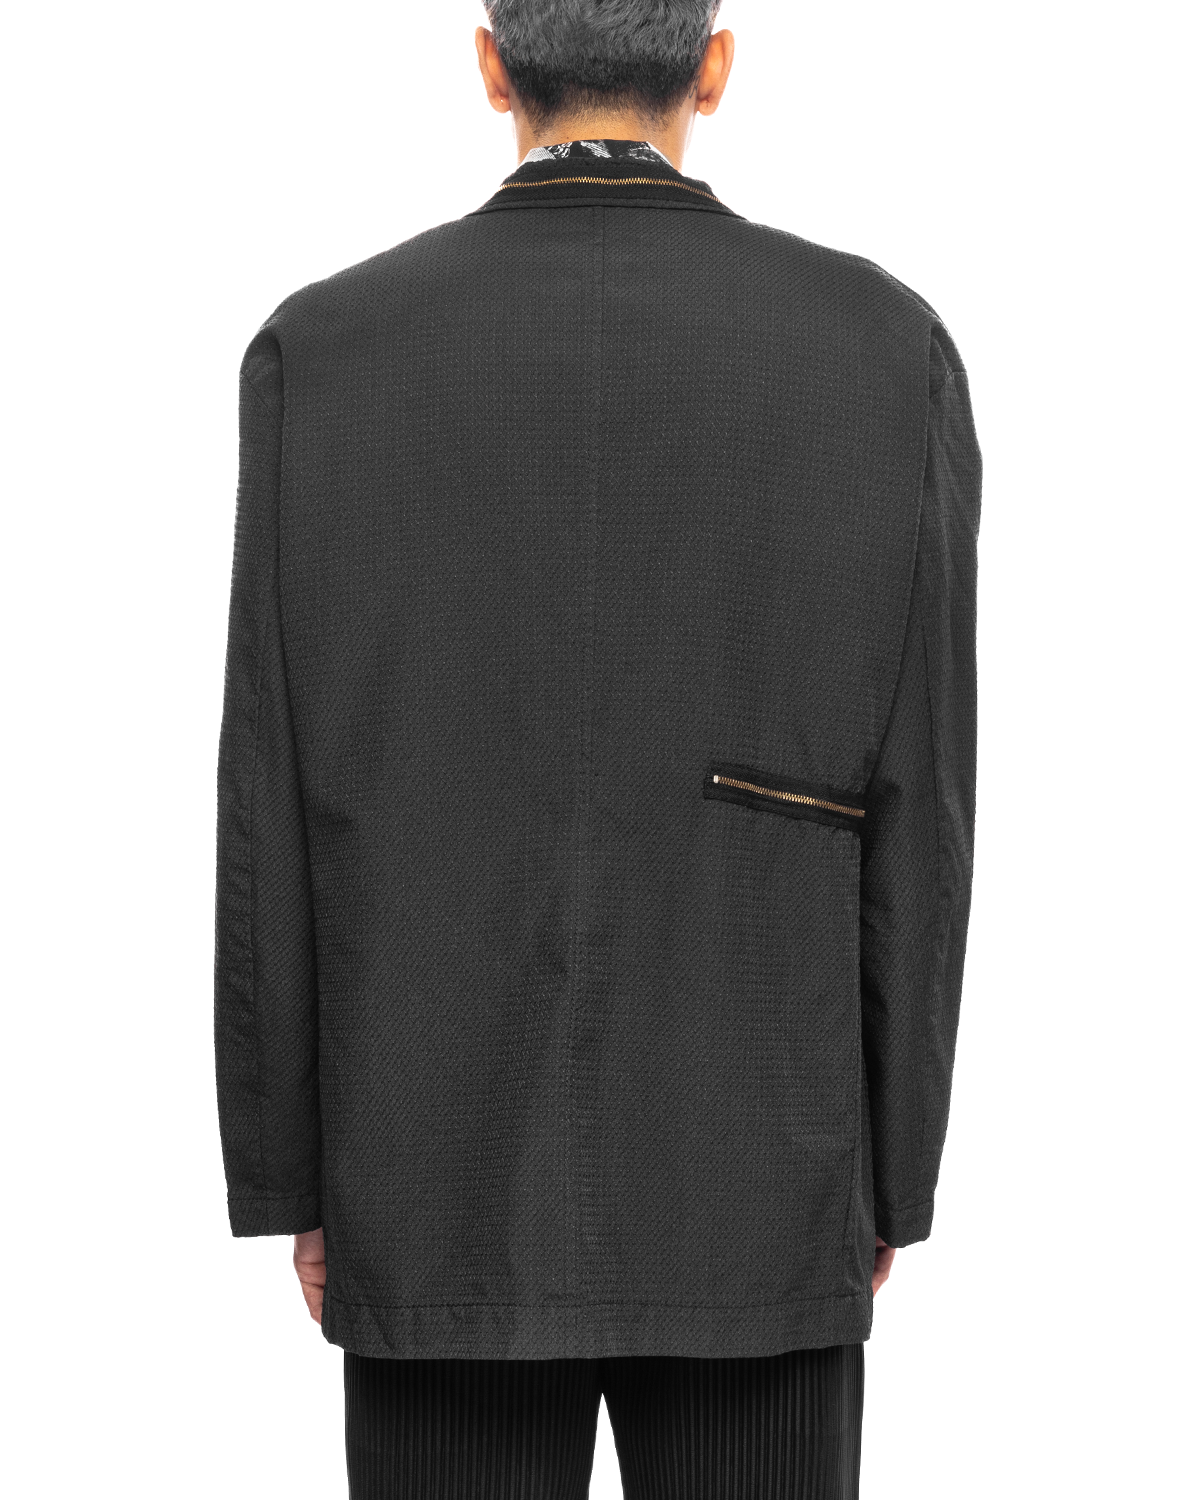 UC1C4102-1 Zipper Detail Jacket Dark Charcoal